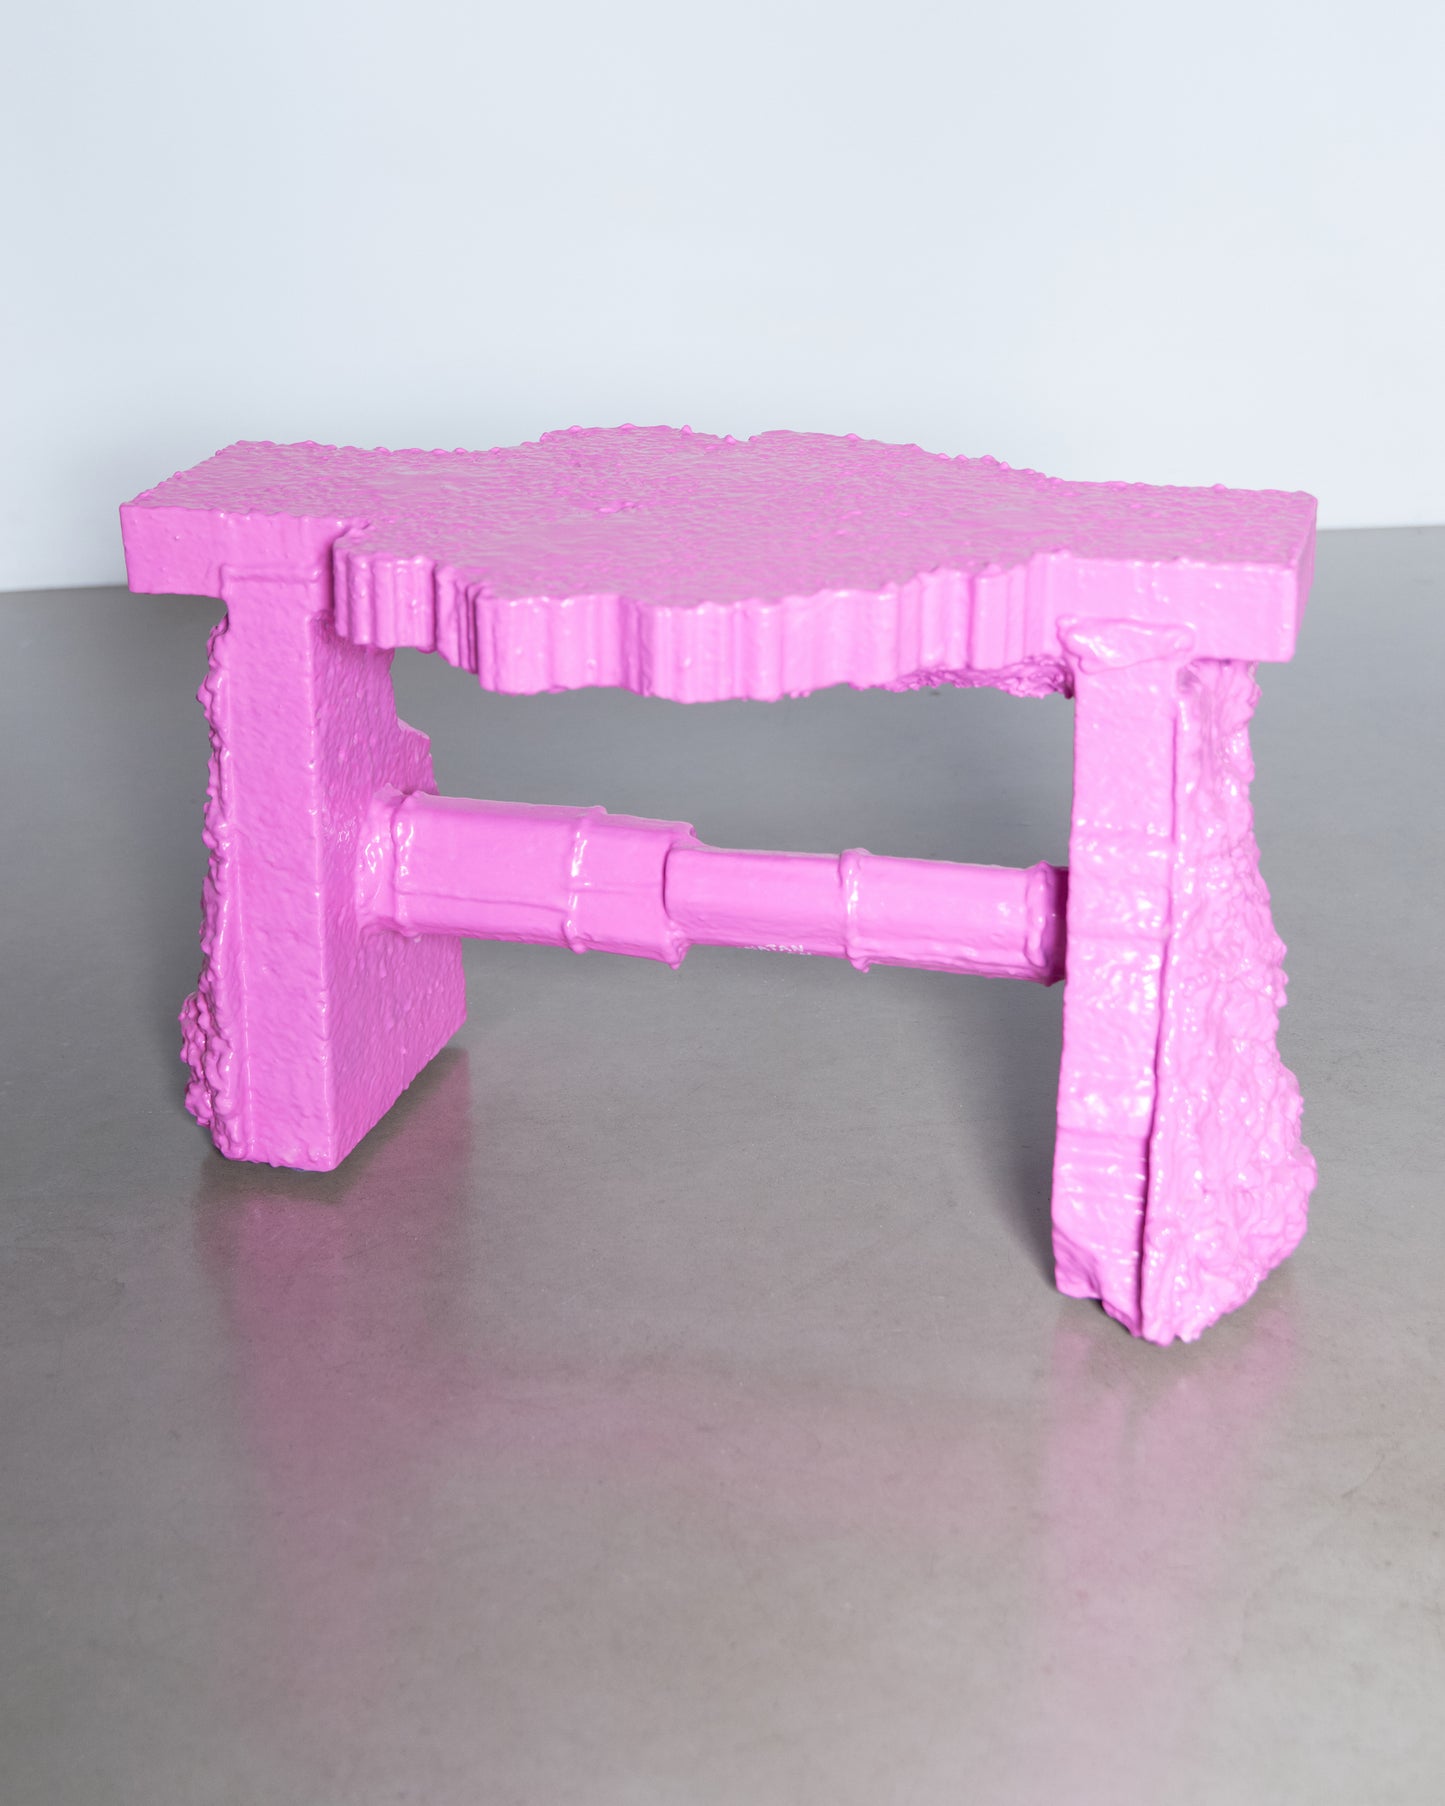 Concrete Side Table by Jonatan Nilsson